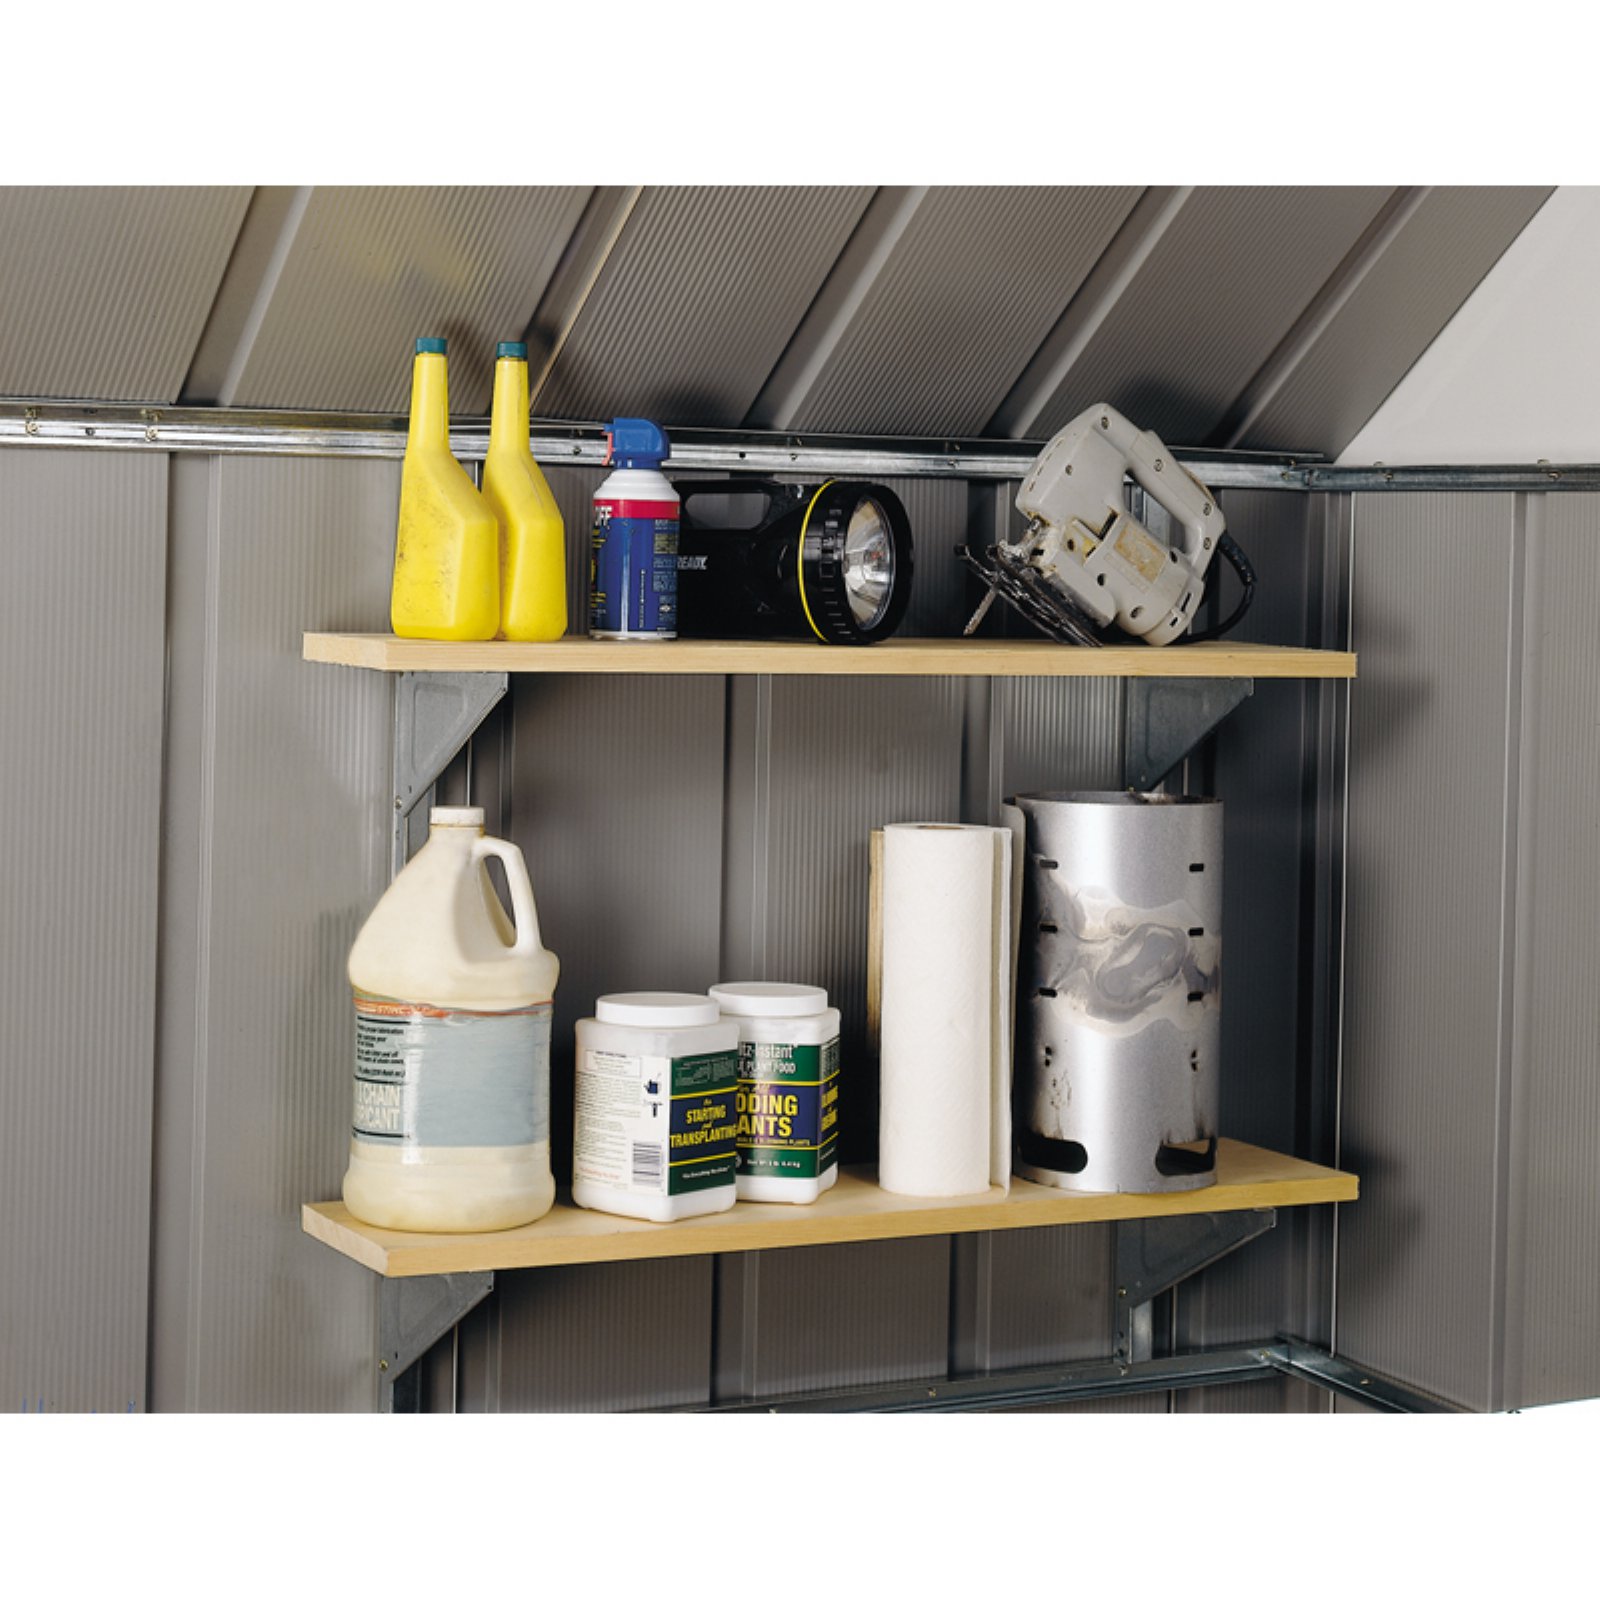 4 Shelf Bracket System-(Shelving Material Not Included)